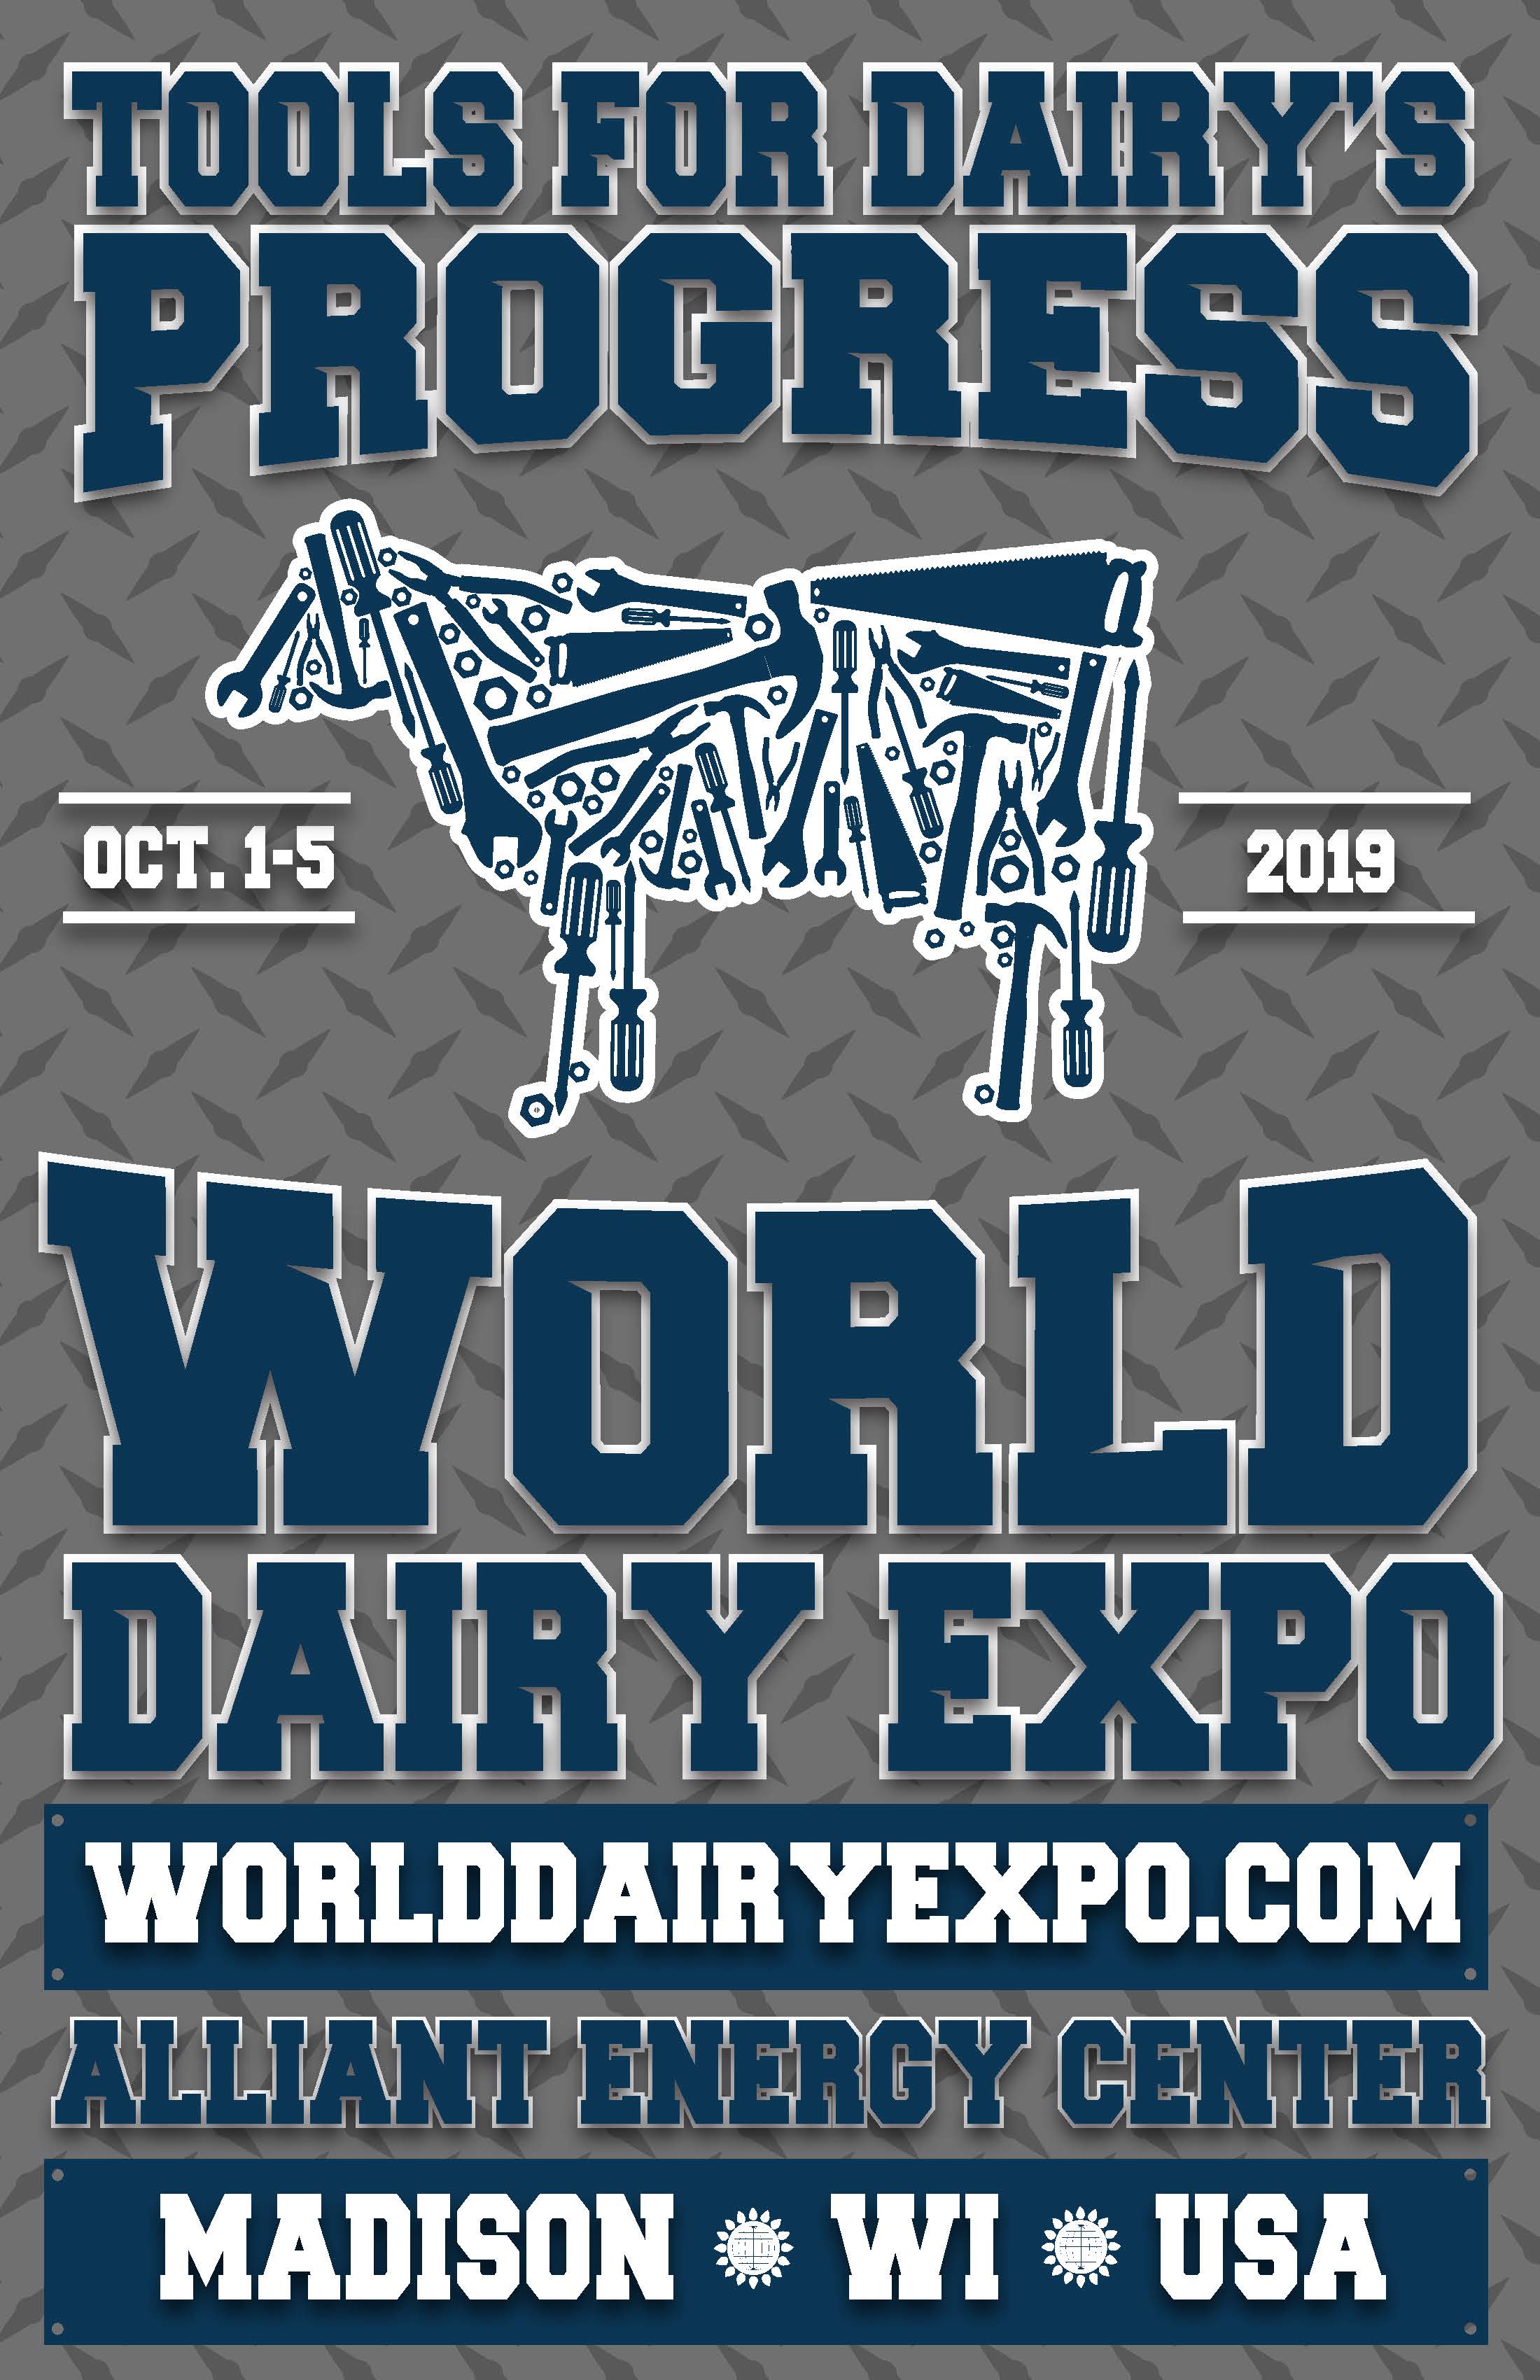 Future Expo Dates World Dairy Expo